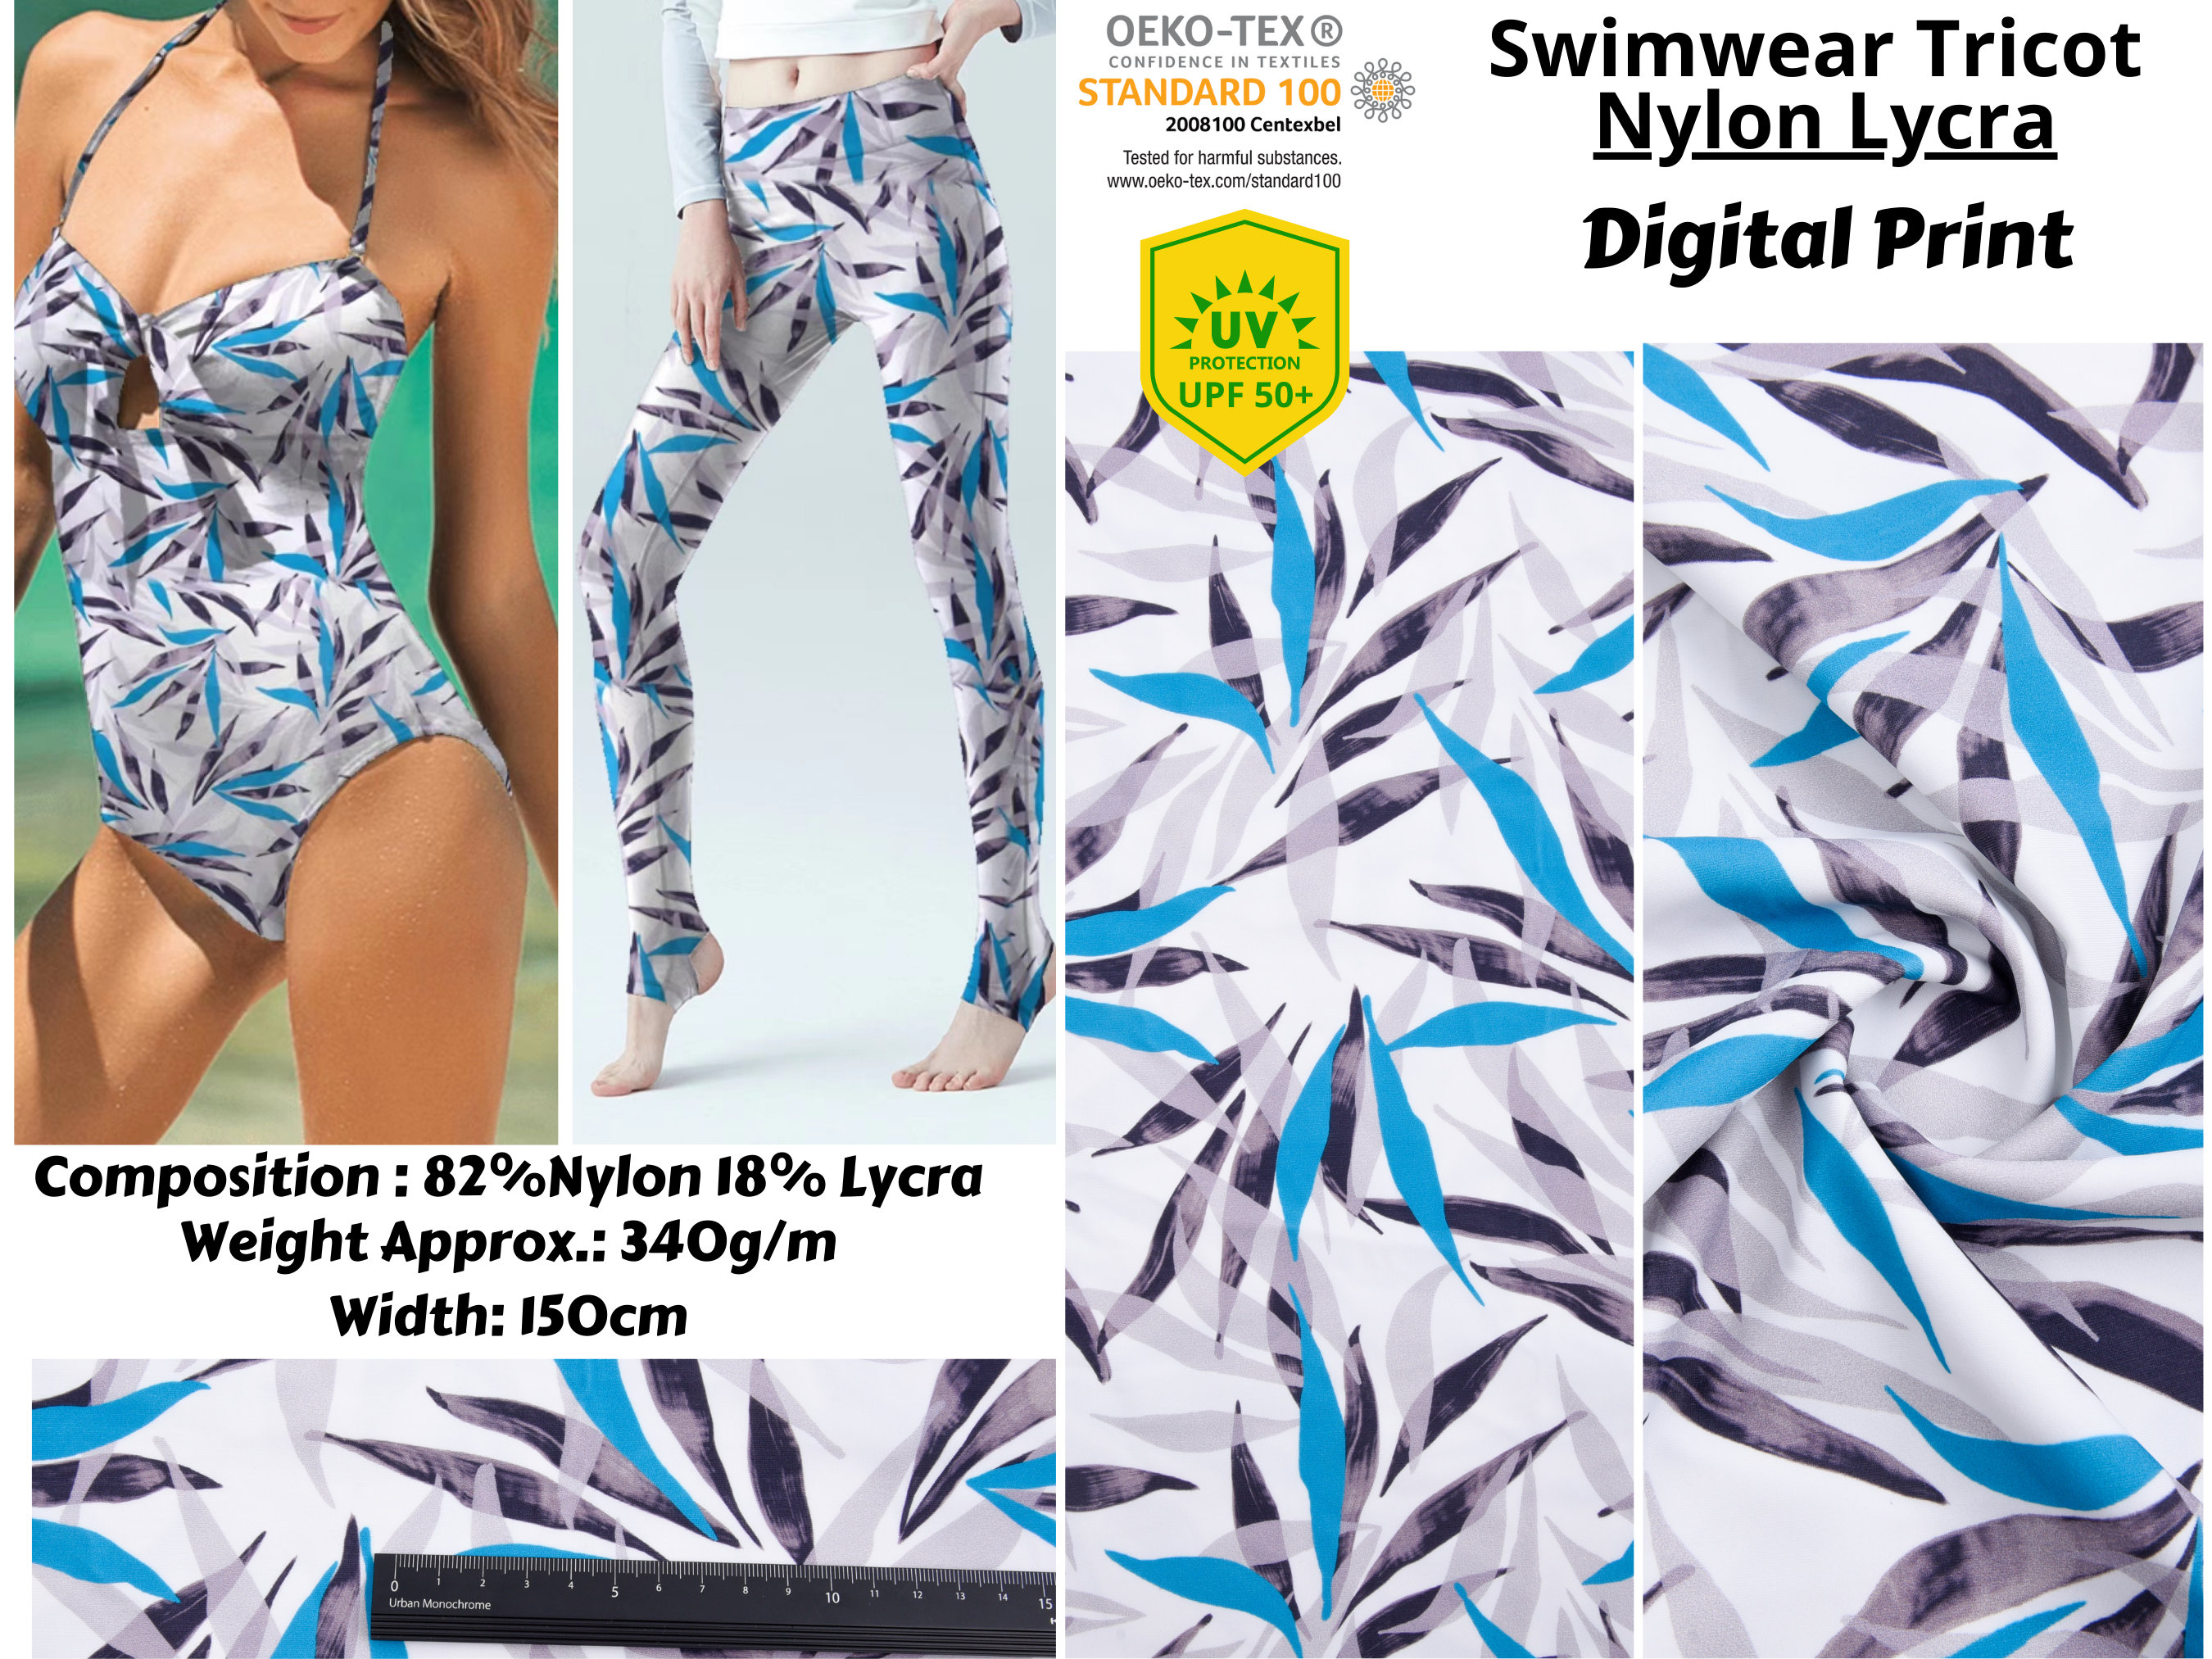 Nylon Lycra Spandex Swimwear/Activewear Fabric 56-58 Wide by The Yard  (White)